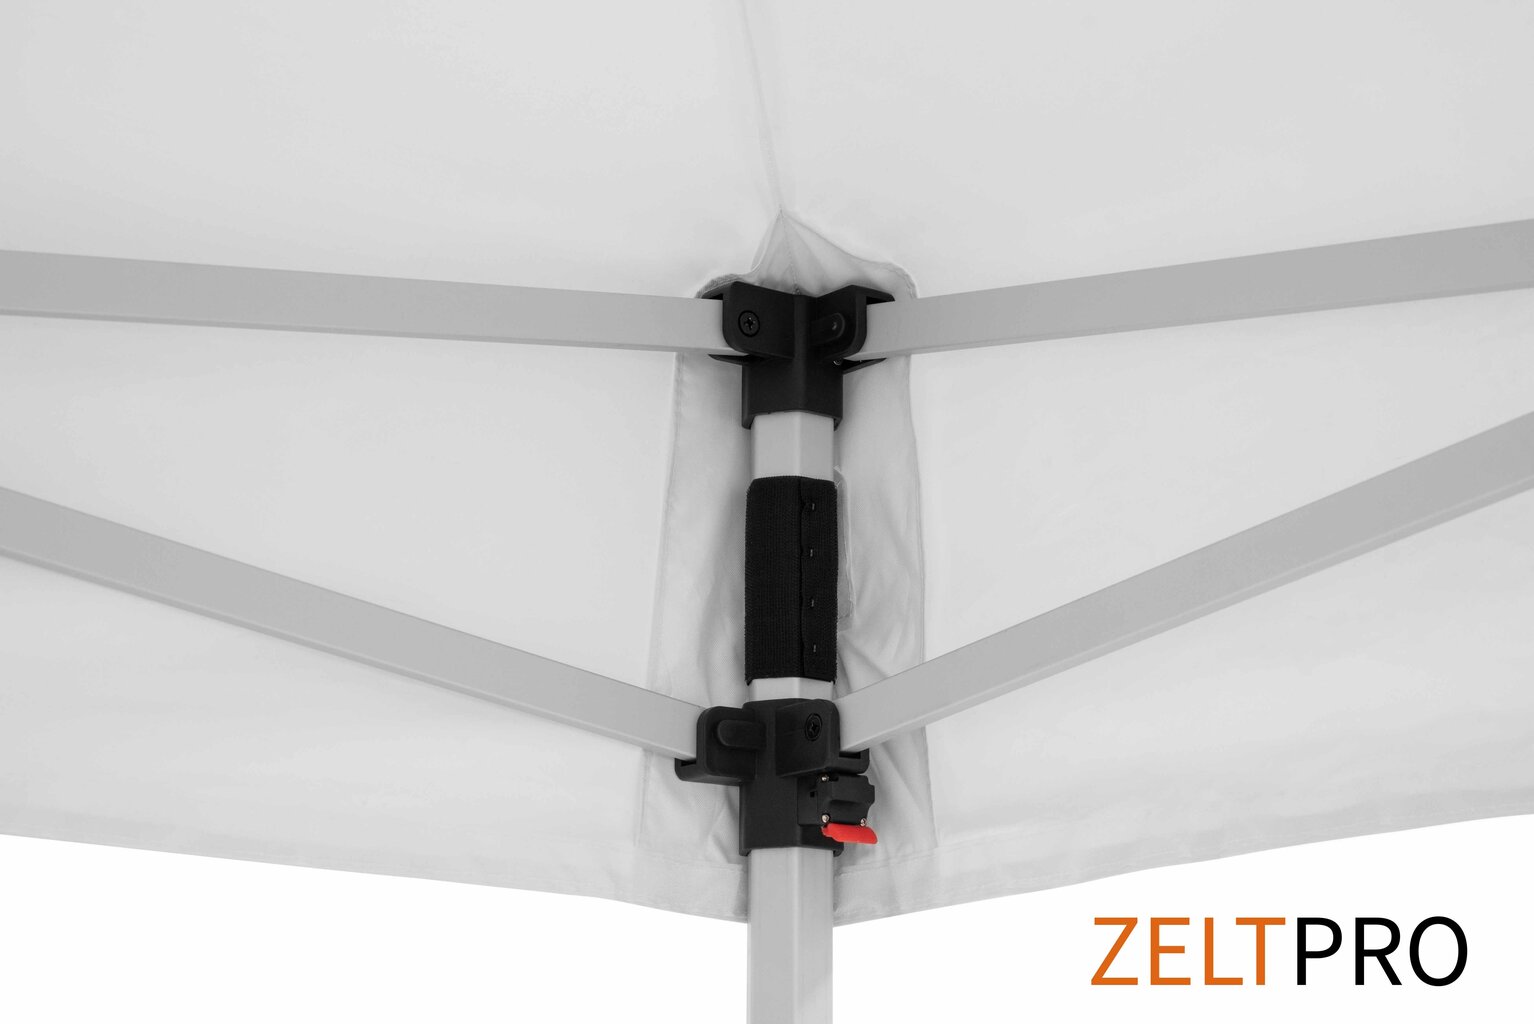 Prekybinė palapinė Zeltpro TITAN Balta, 3x6 цена и информация | Palapinės | pigu.lt